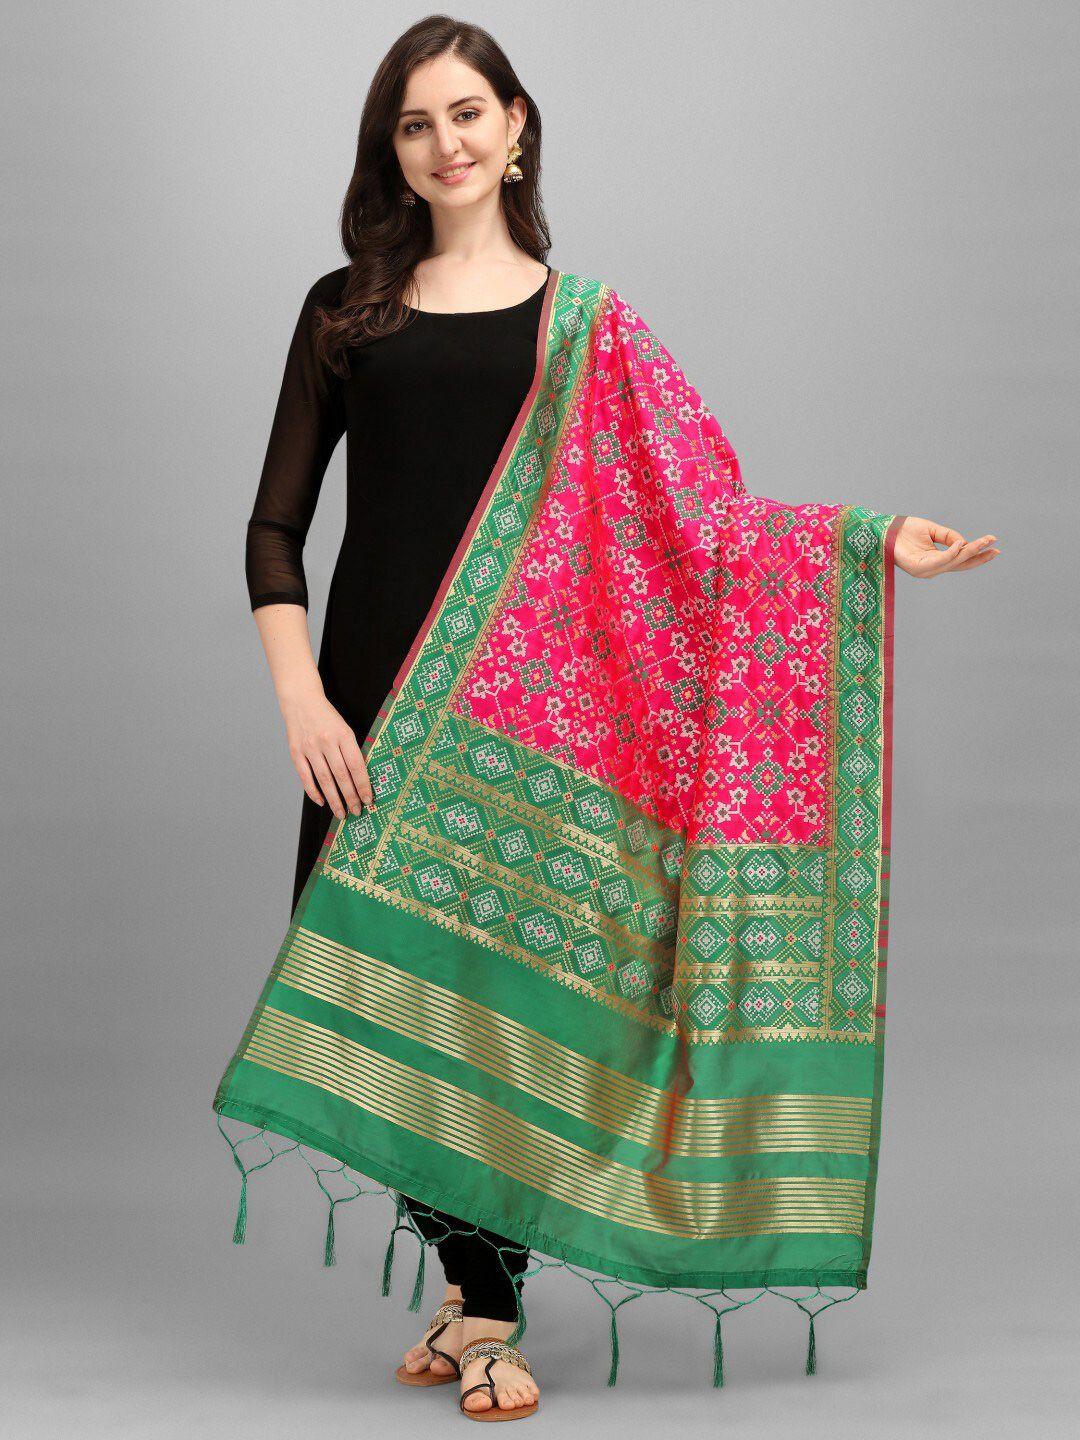 pandadi saree pink & green ethnic motifs woven design dupatta with zari